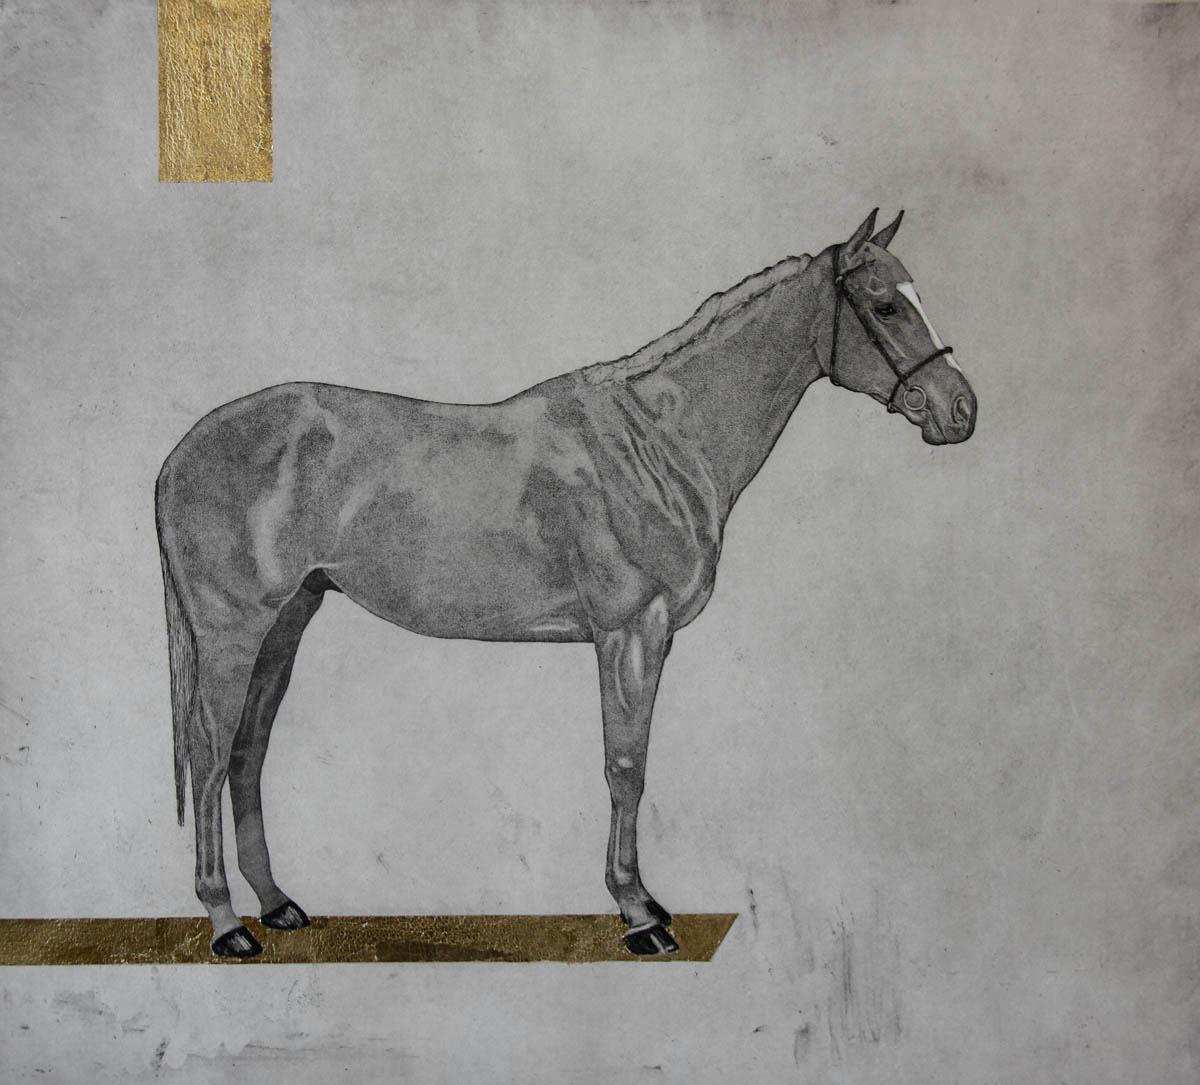 Guy Allen Animal Print - The Winner BY GUY ALLEN, Race Horse Art, Racing Art, Art of Horses, Horse Art 